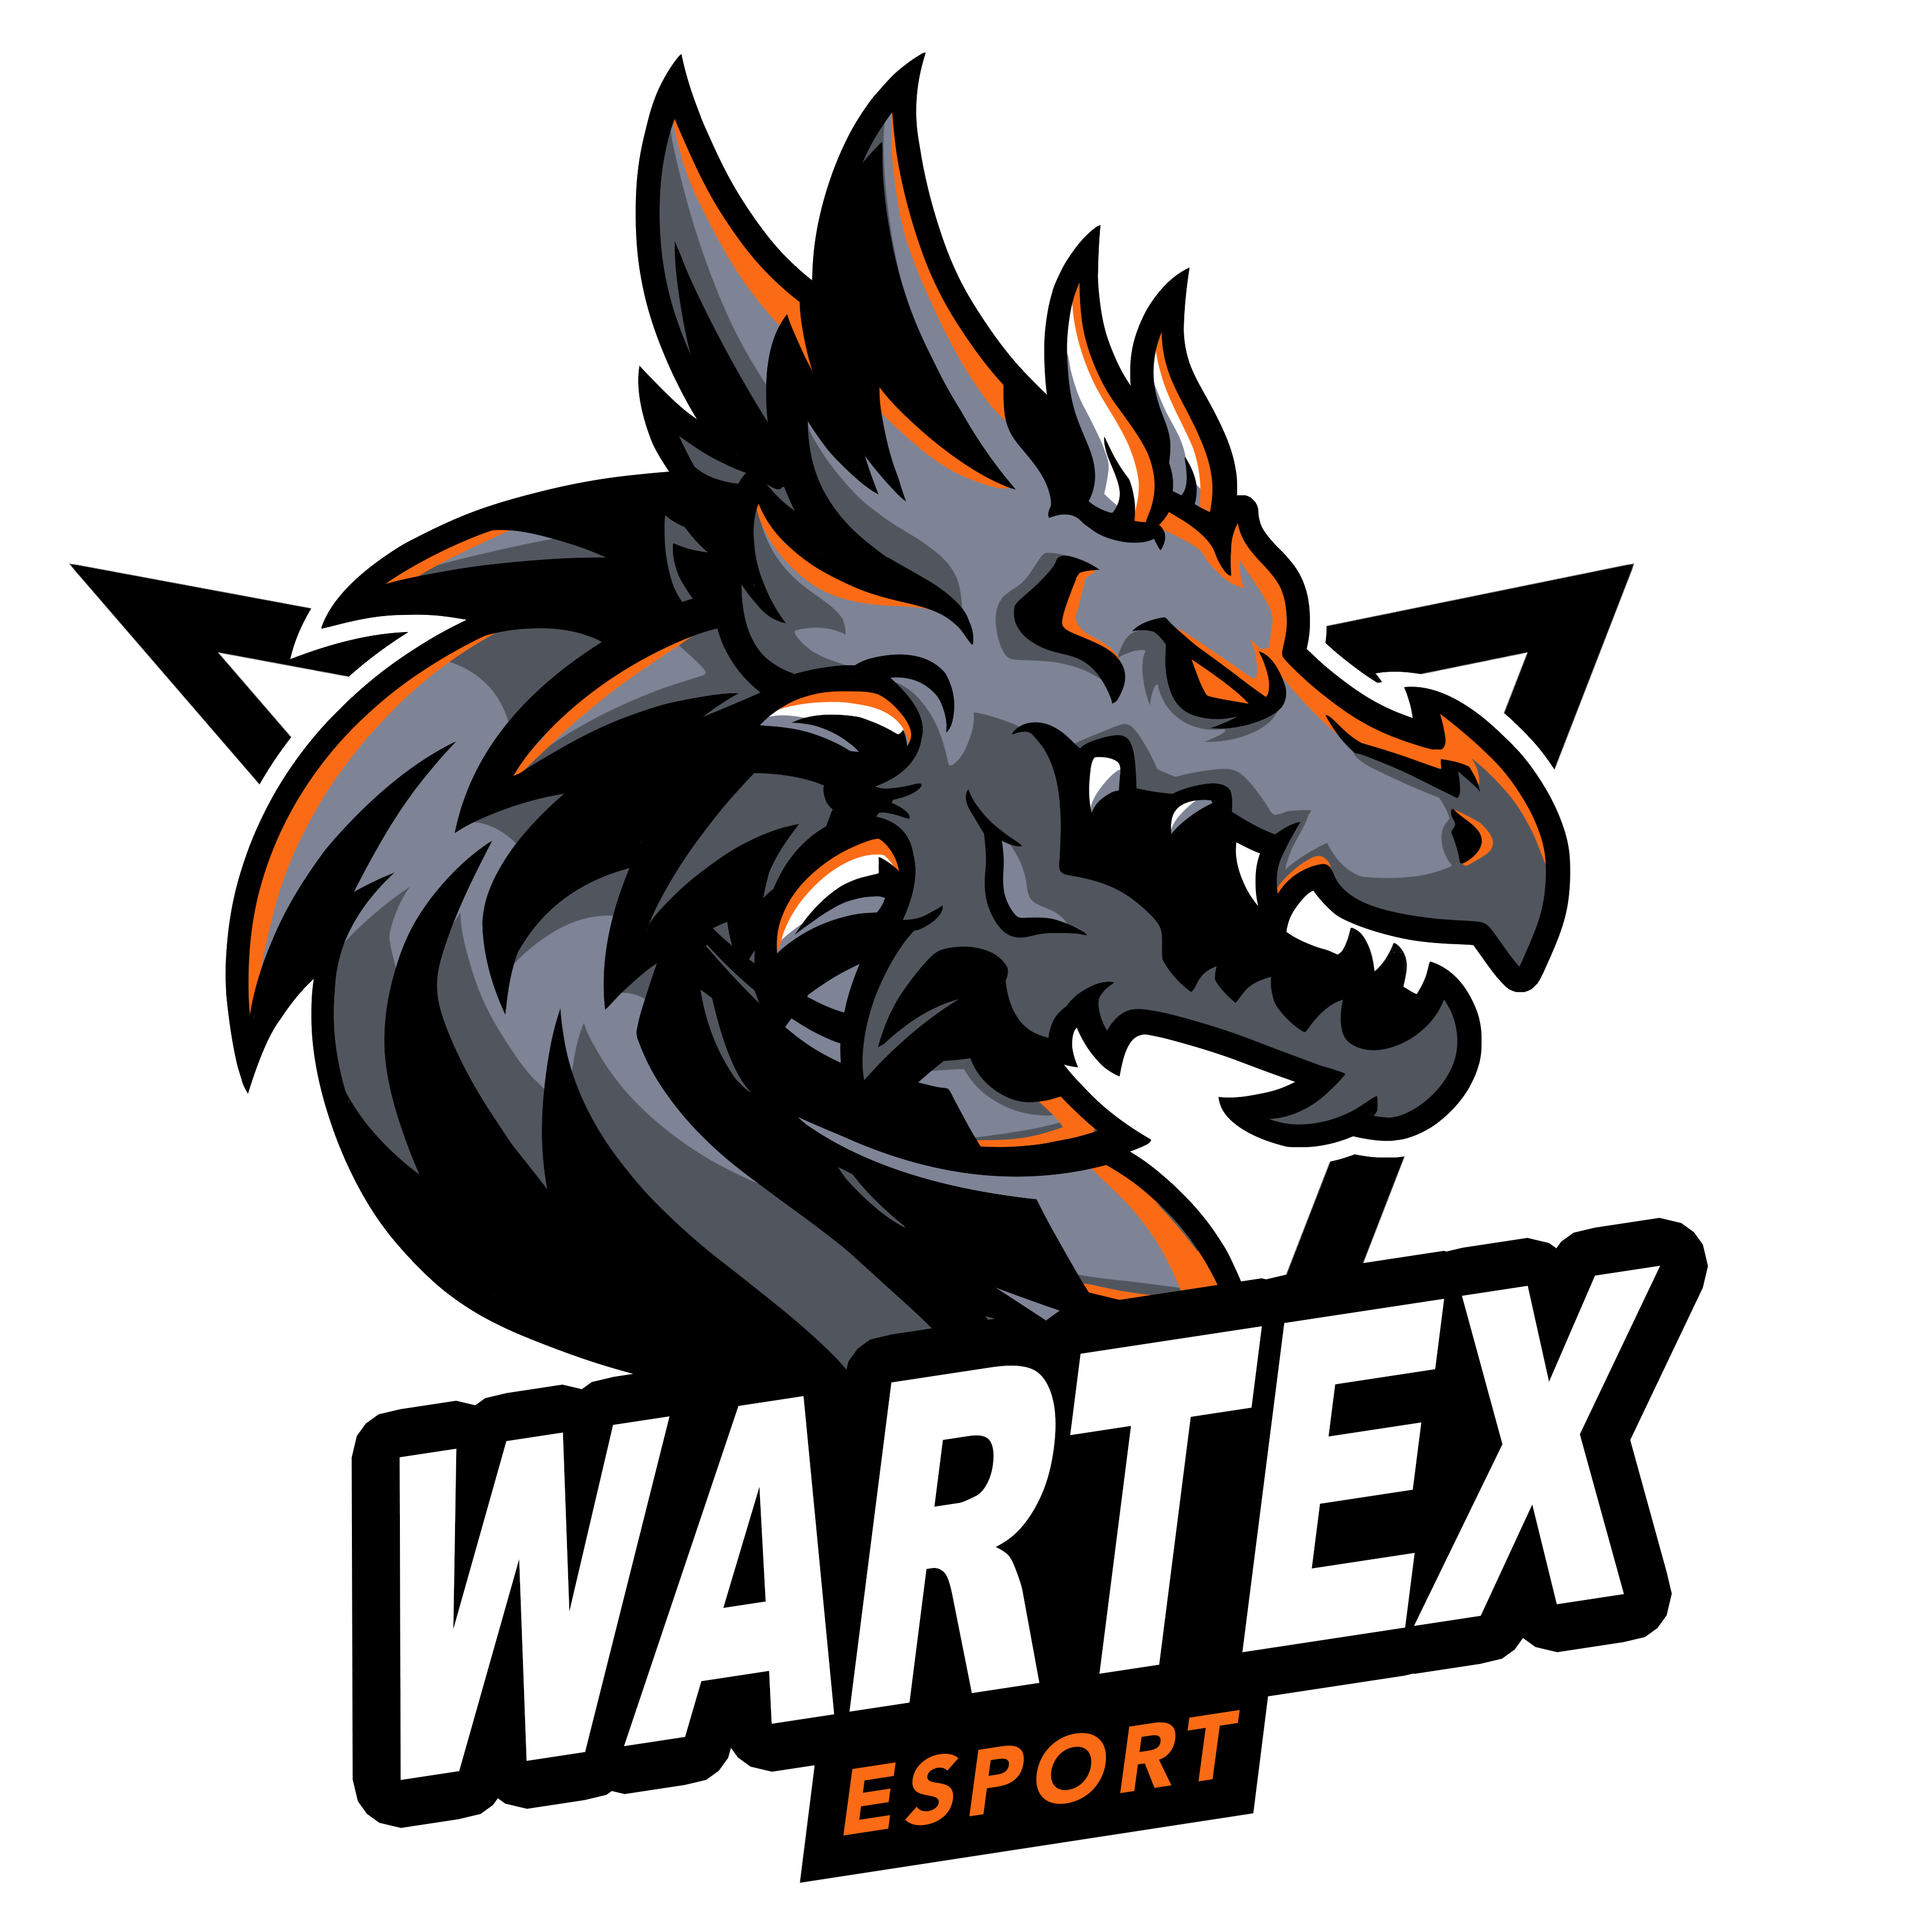 Wartex eSports